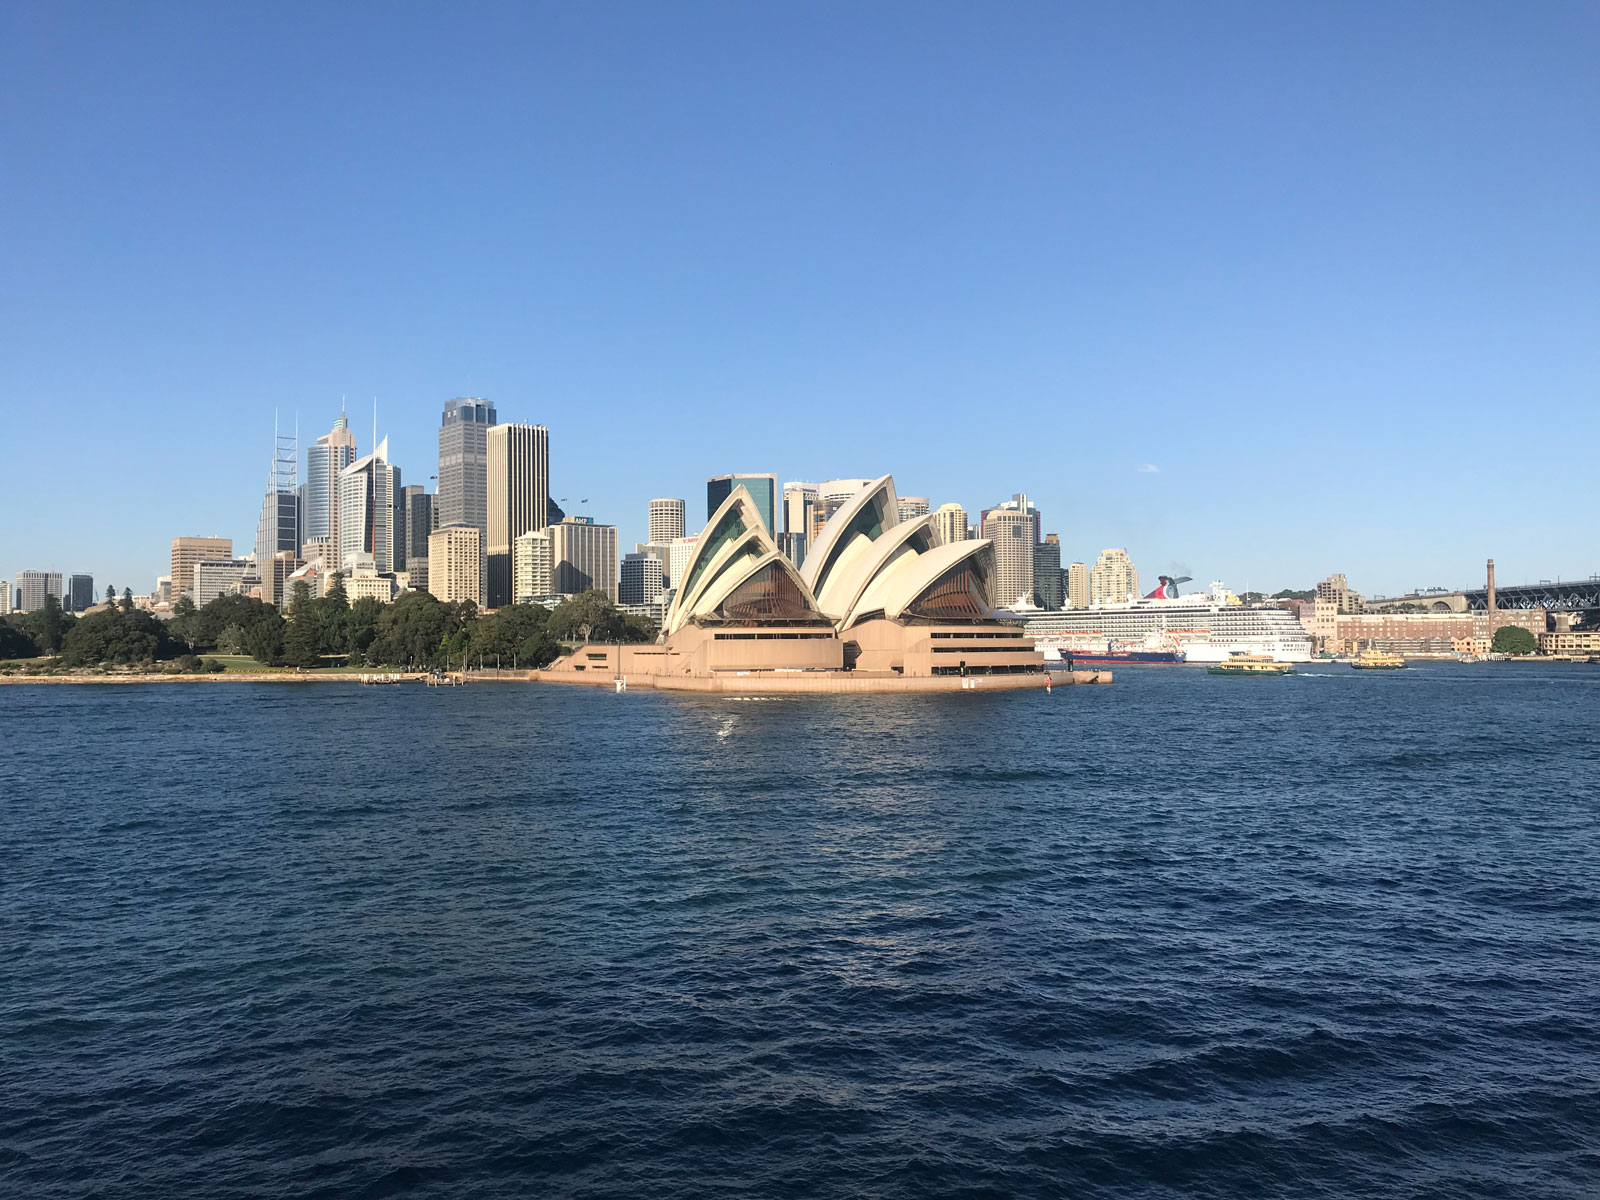 Sydney Harbour before